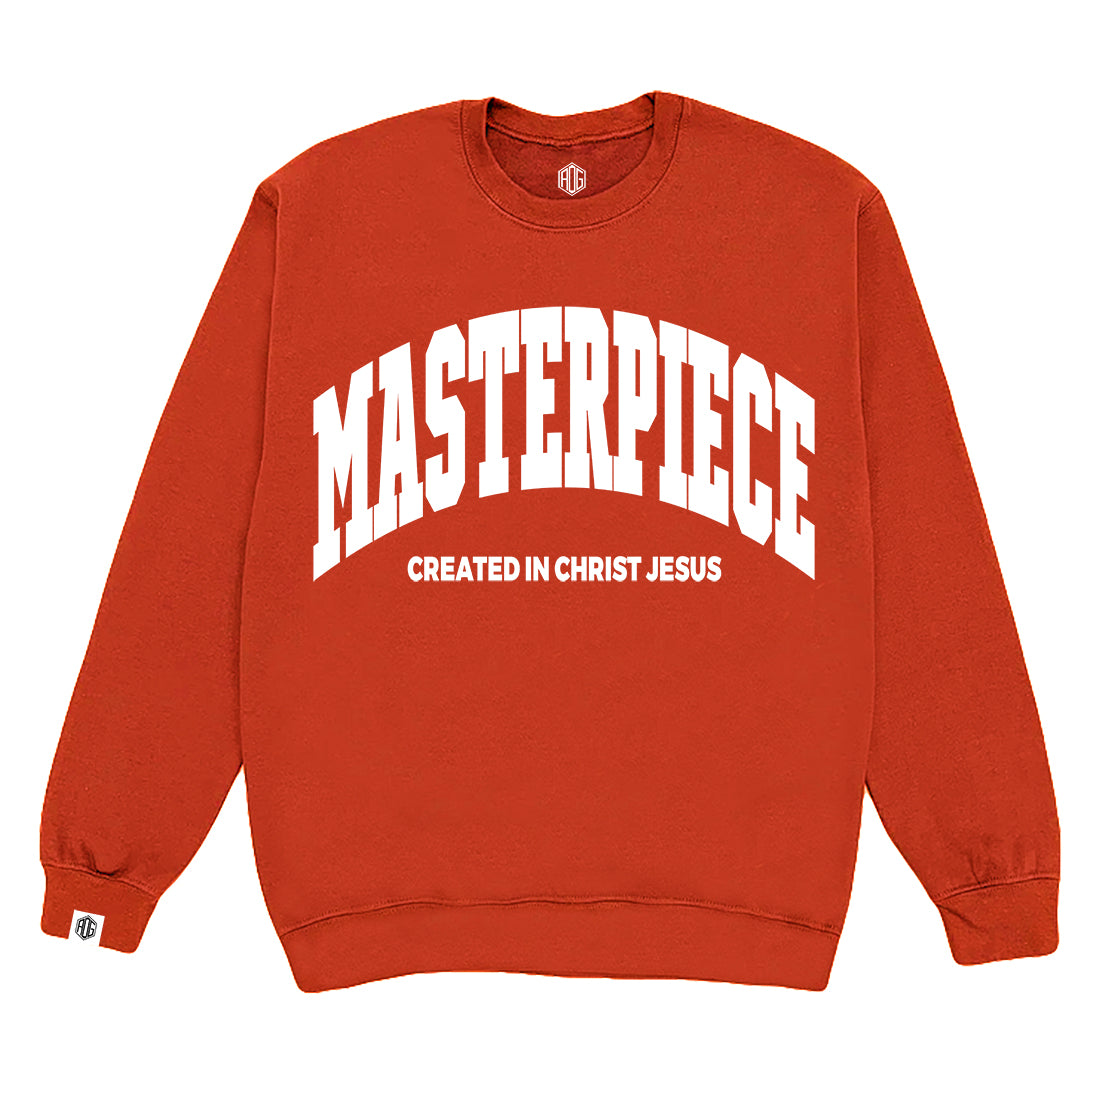 Masterpiece Sweatshirt - Burnt Orange